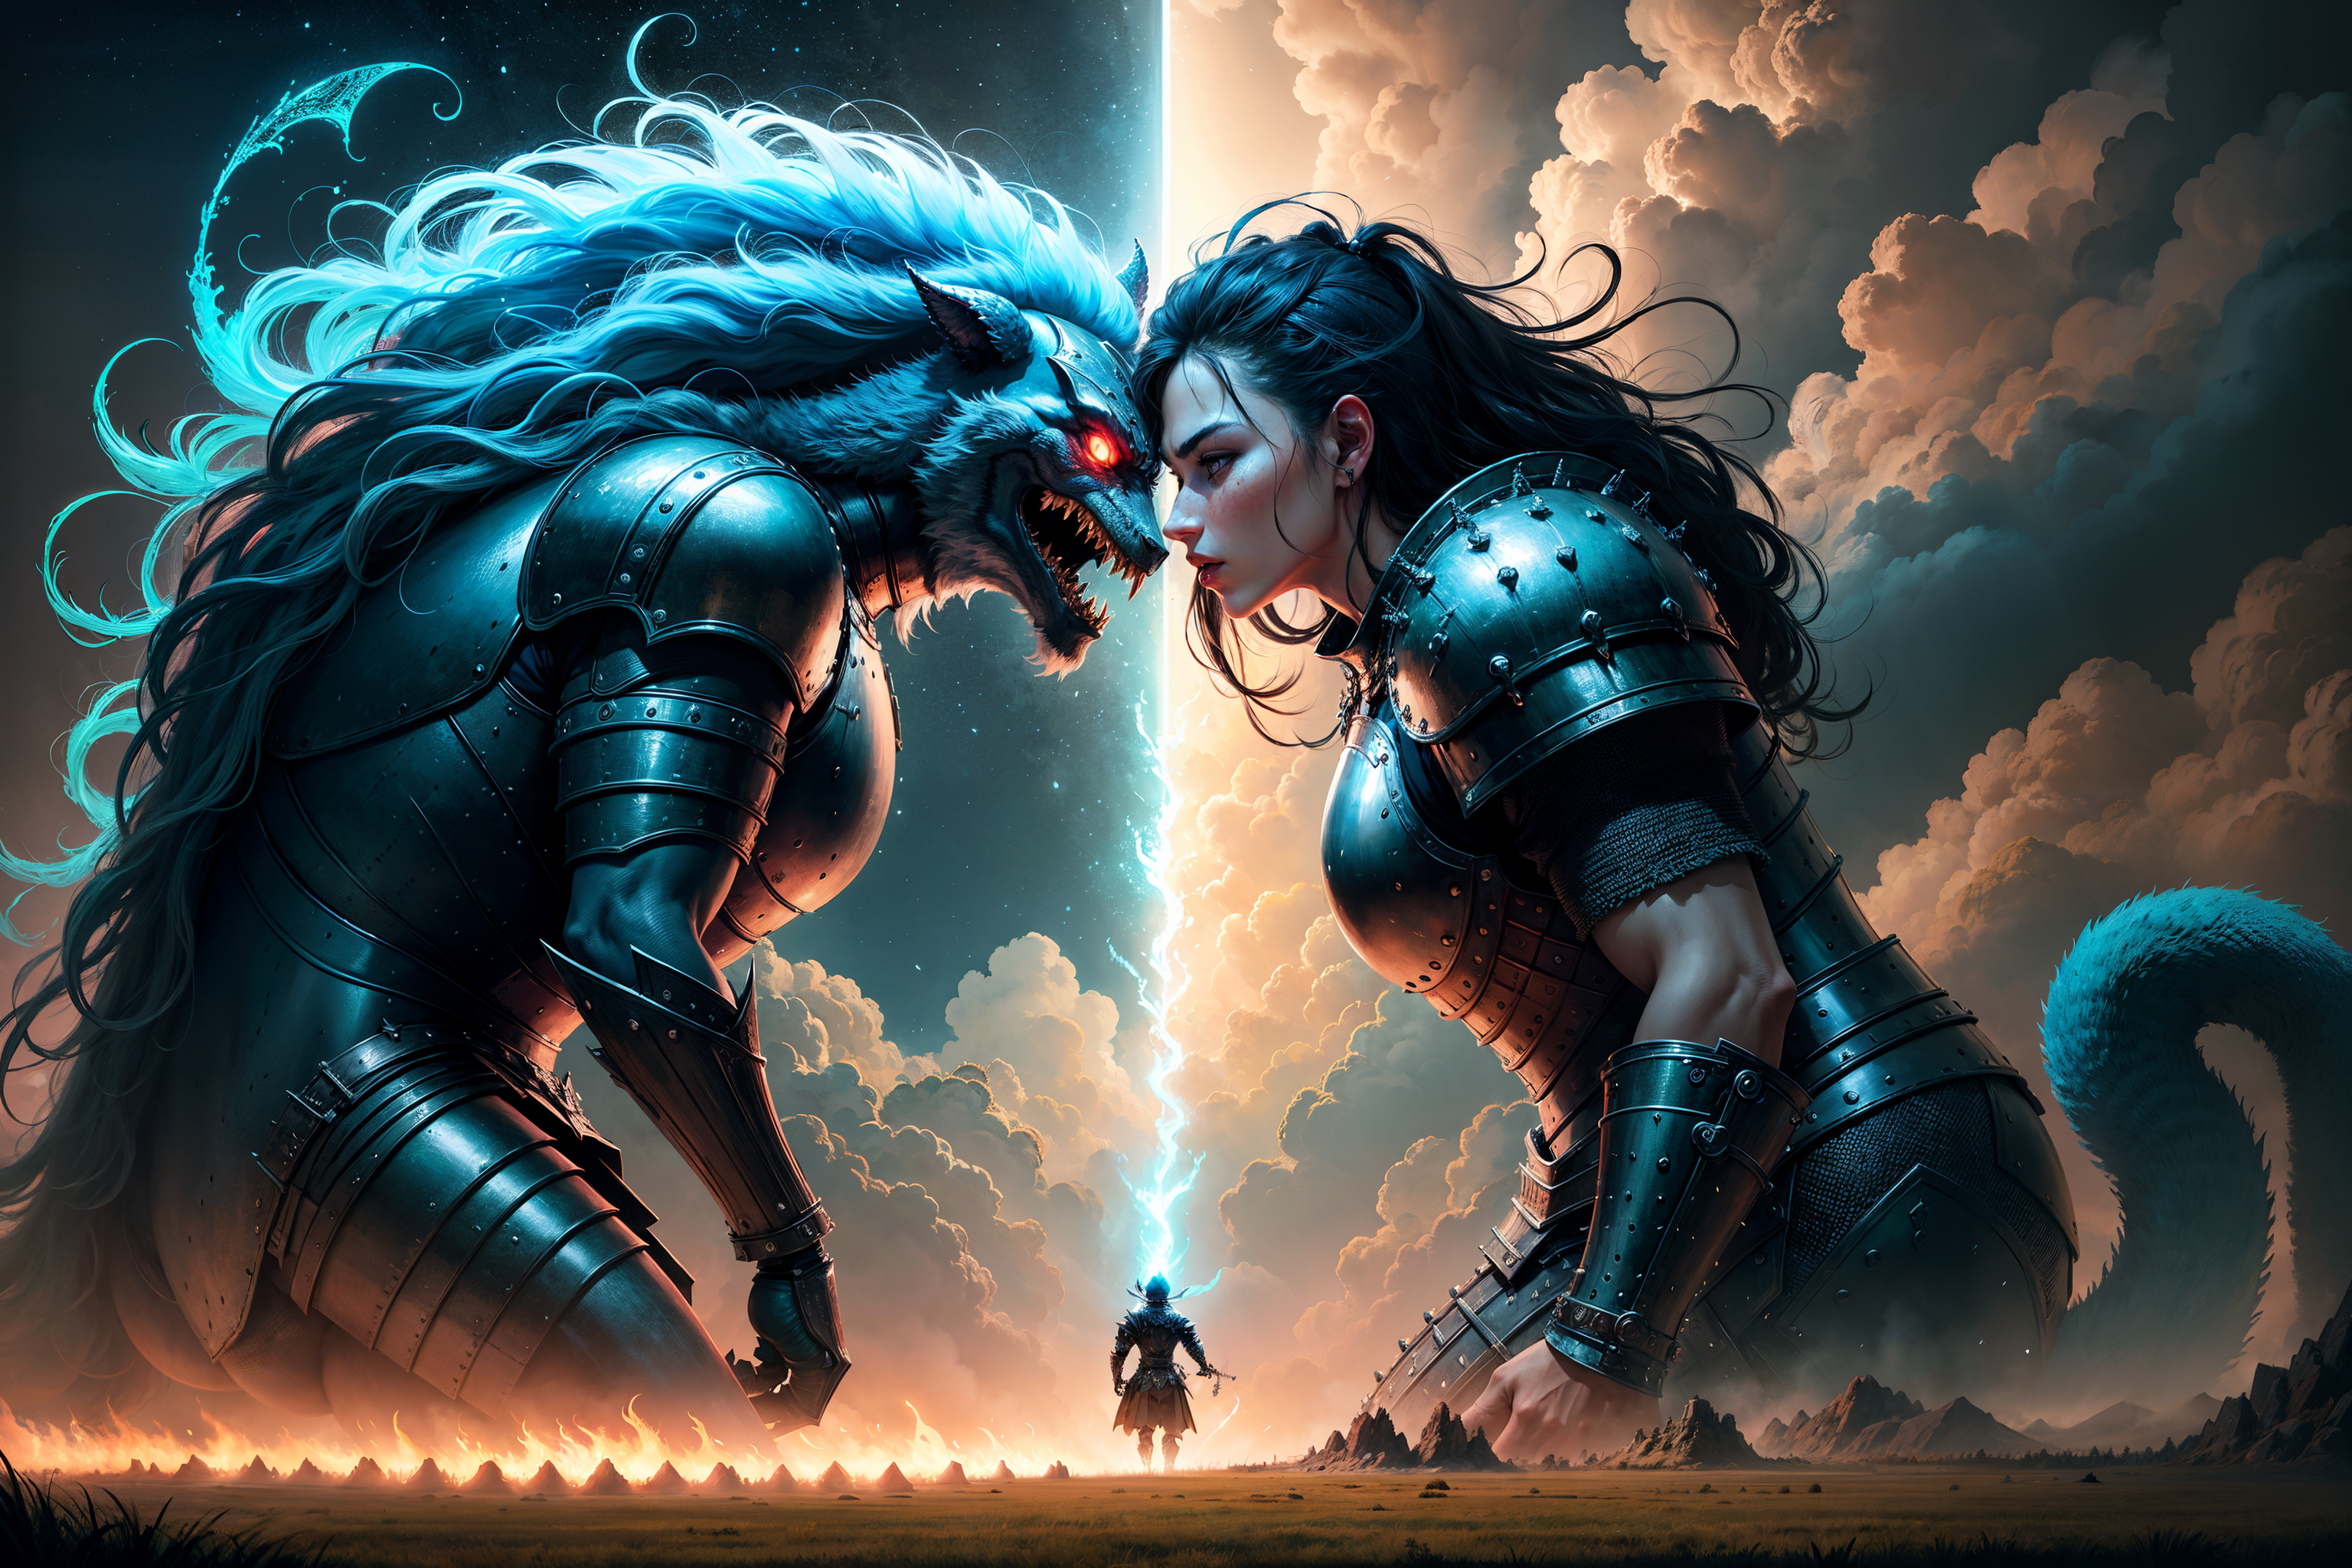 General 3072x2048 giant giant dragon warrior female warrior long hair AI art digital art red eyes tail armor clouds lightning